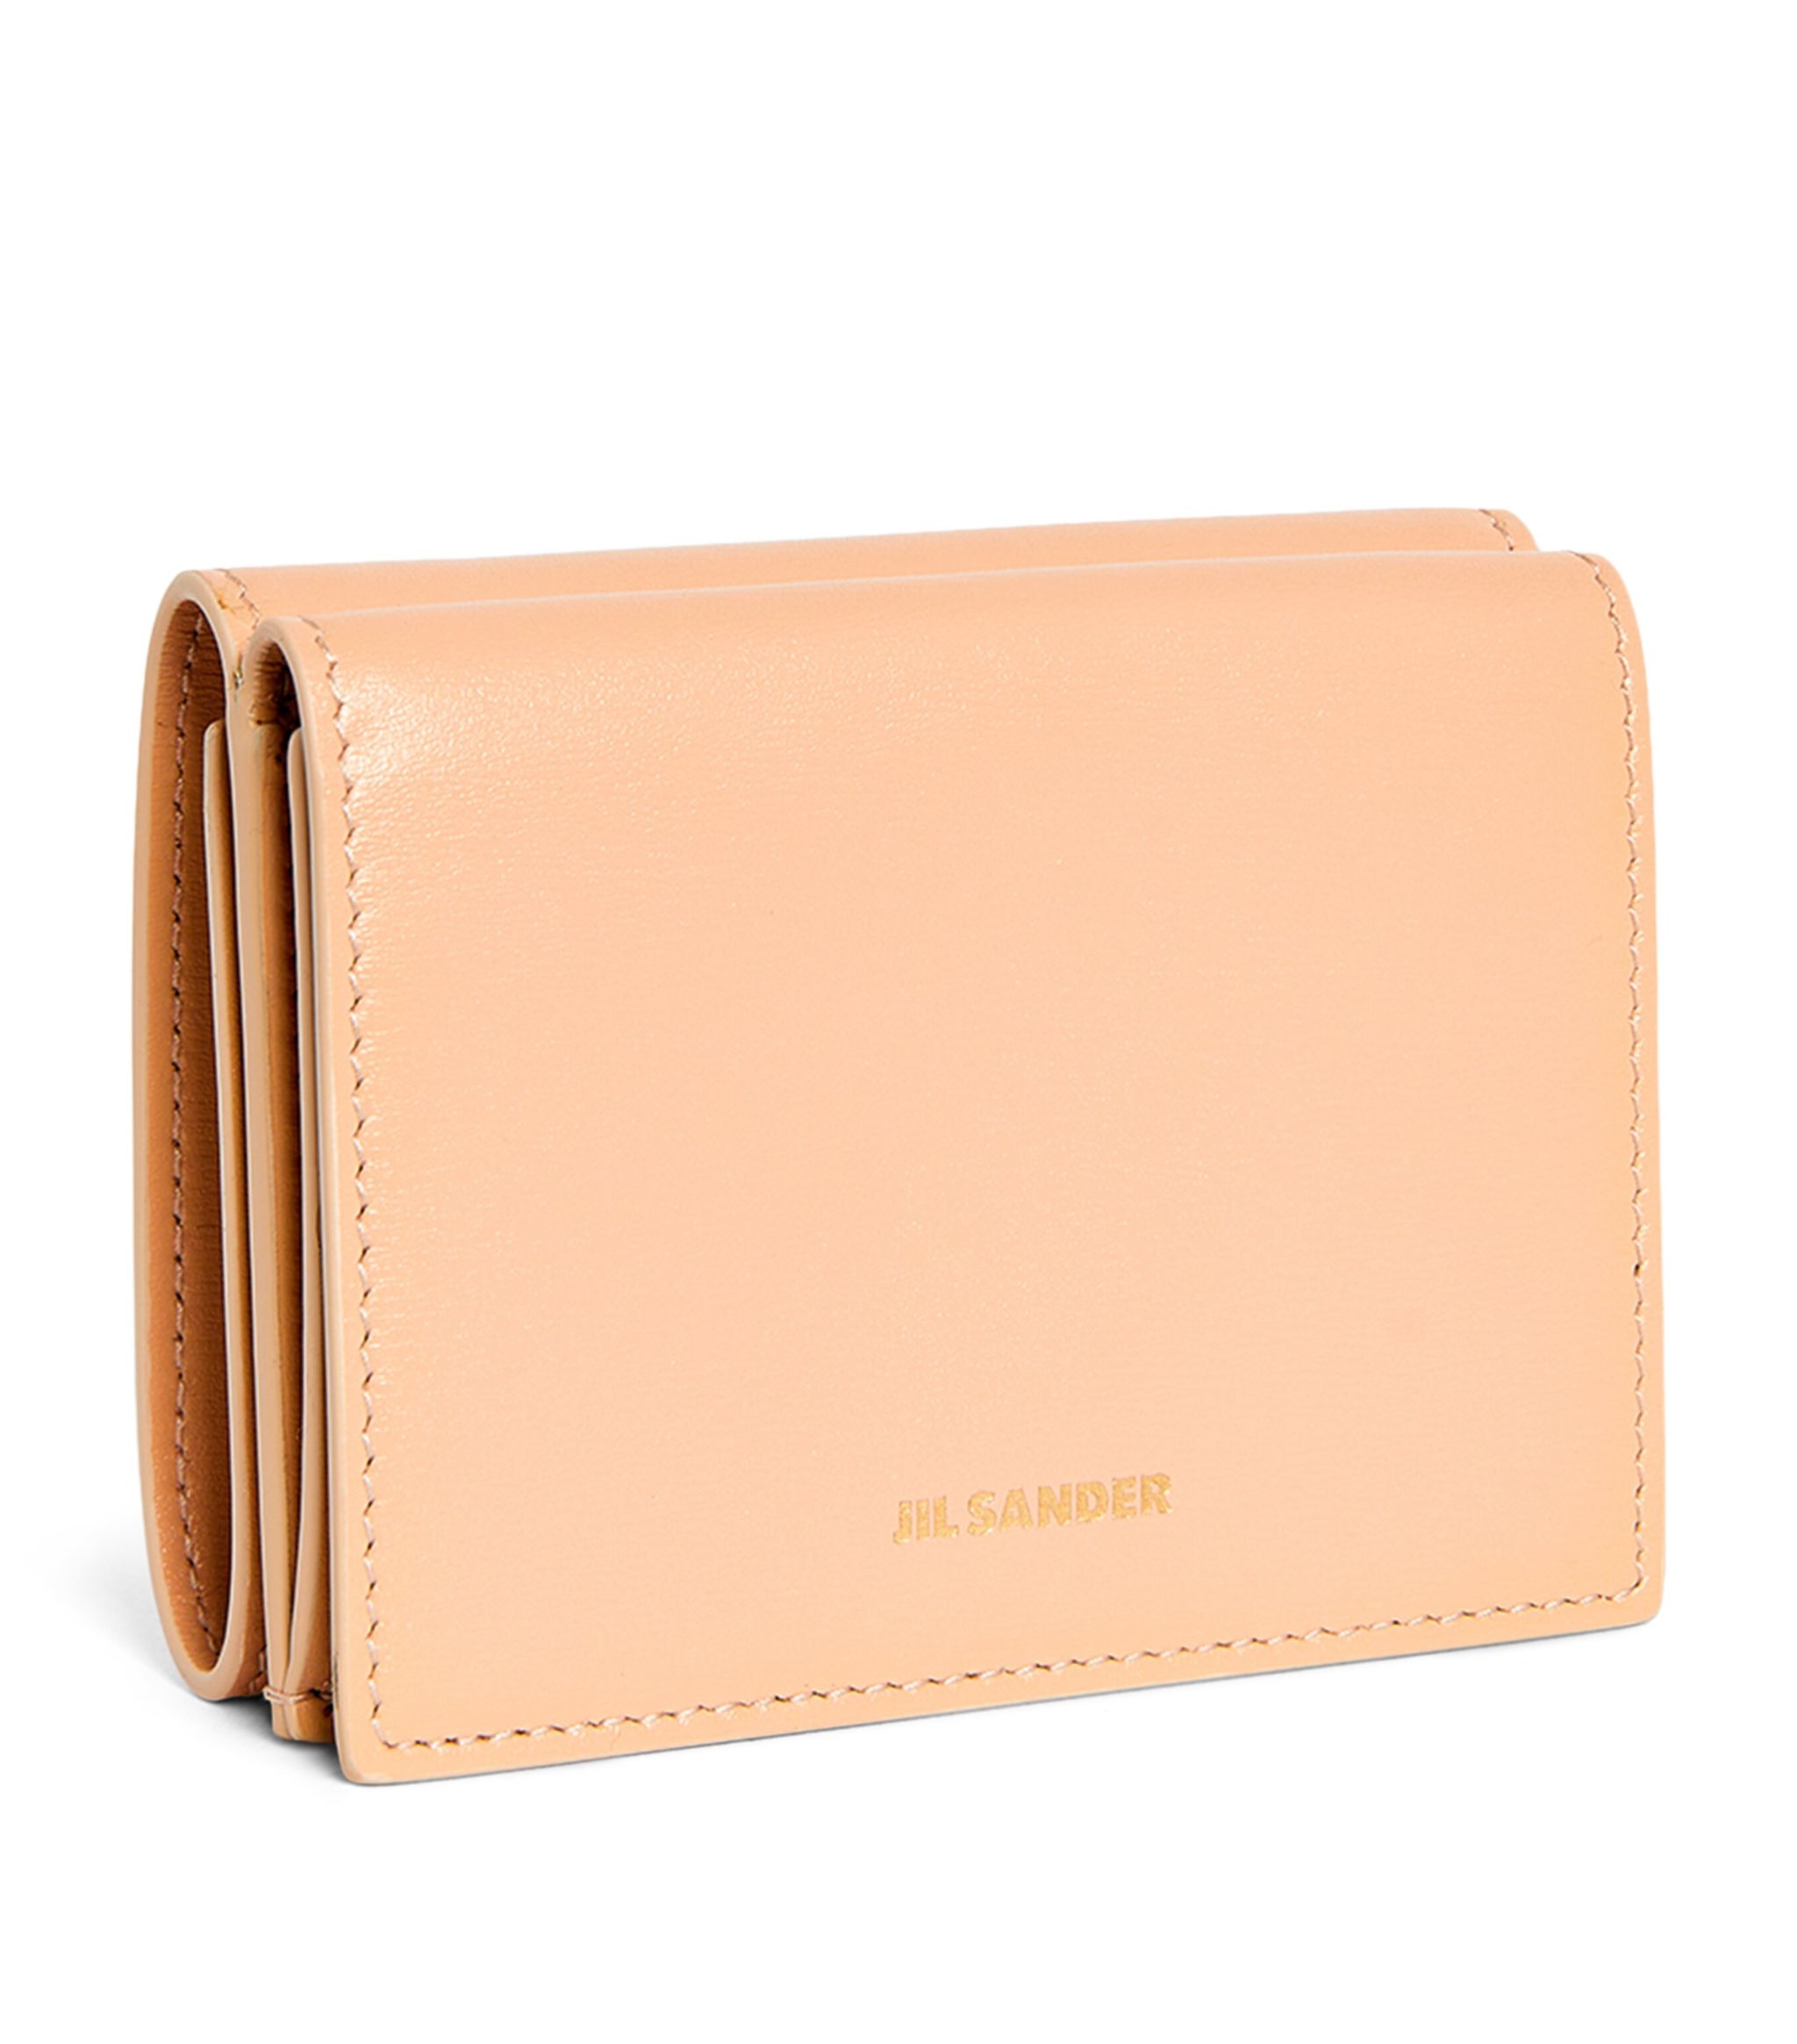 6. JIL SANDER Leather Wallet